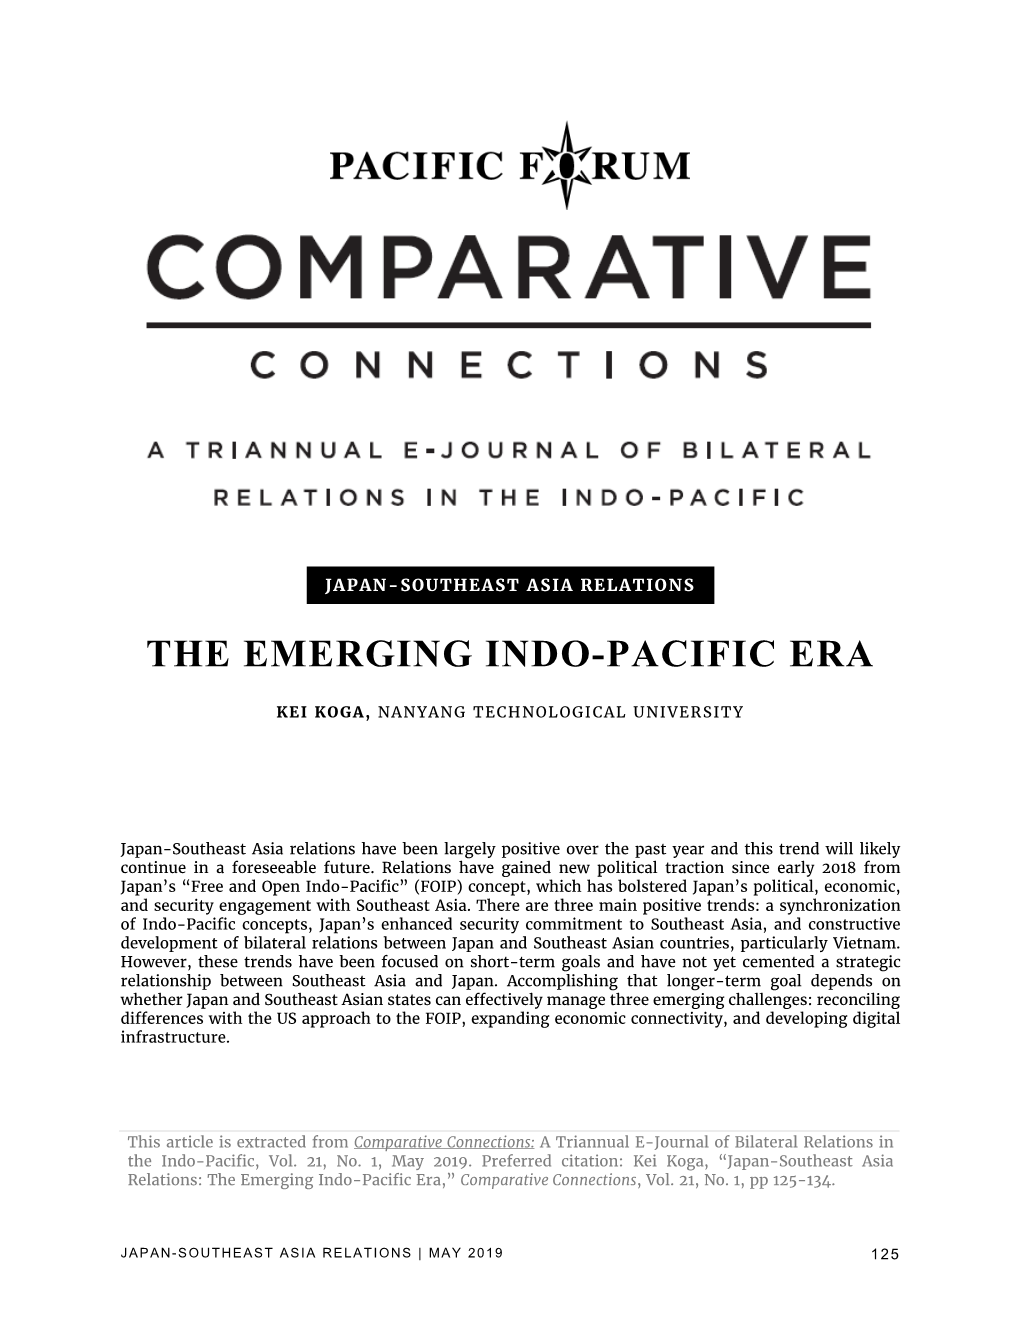 The Emerging Indo-Pacific Era